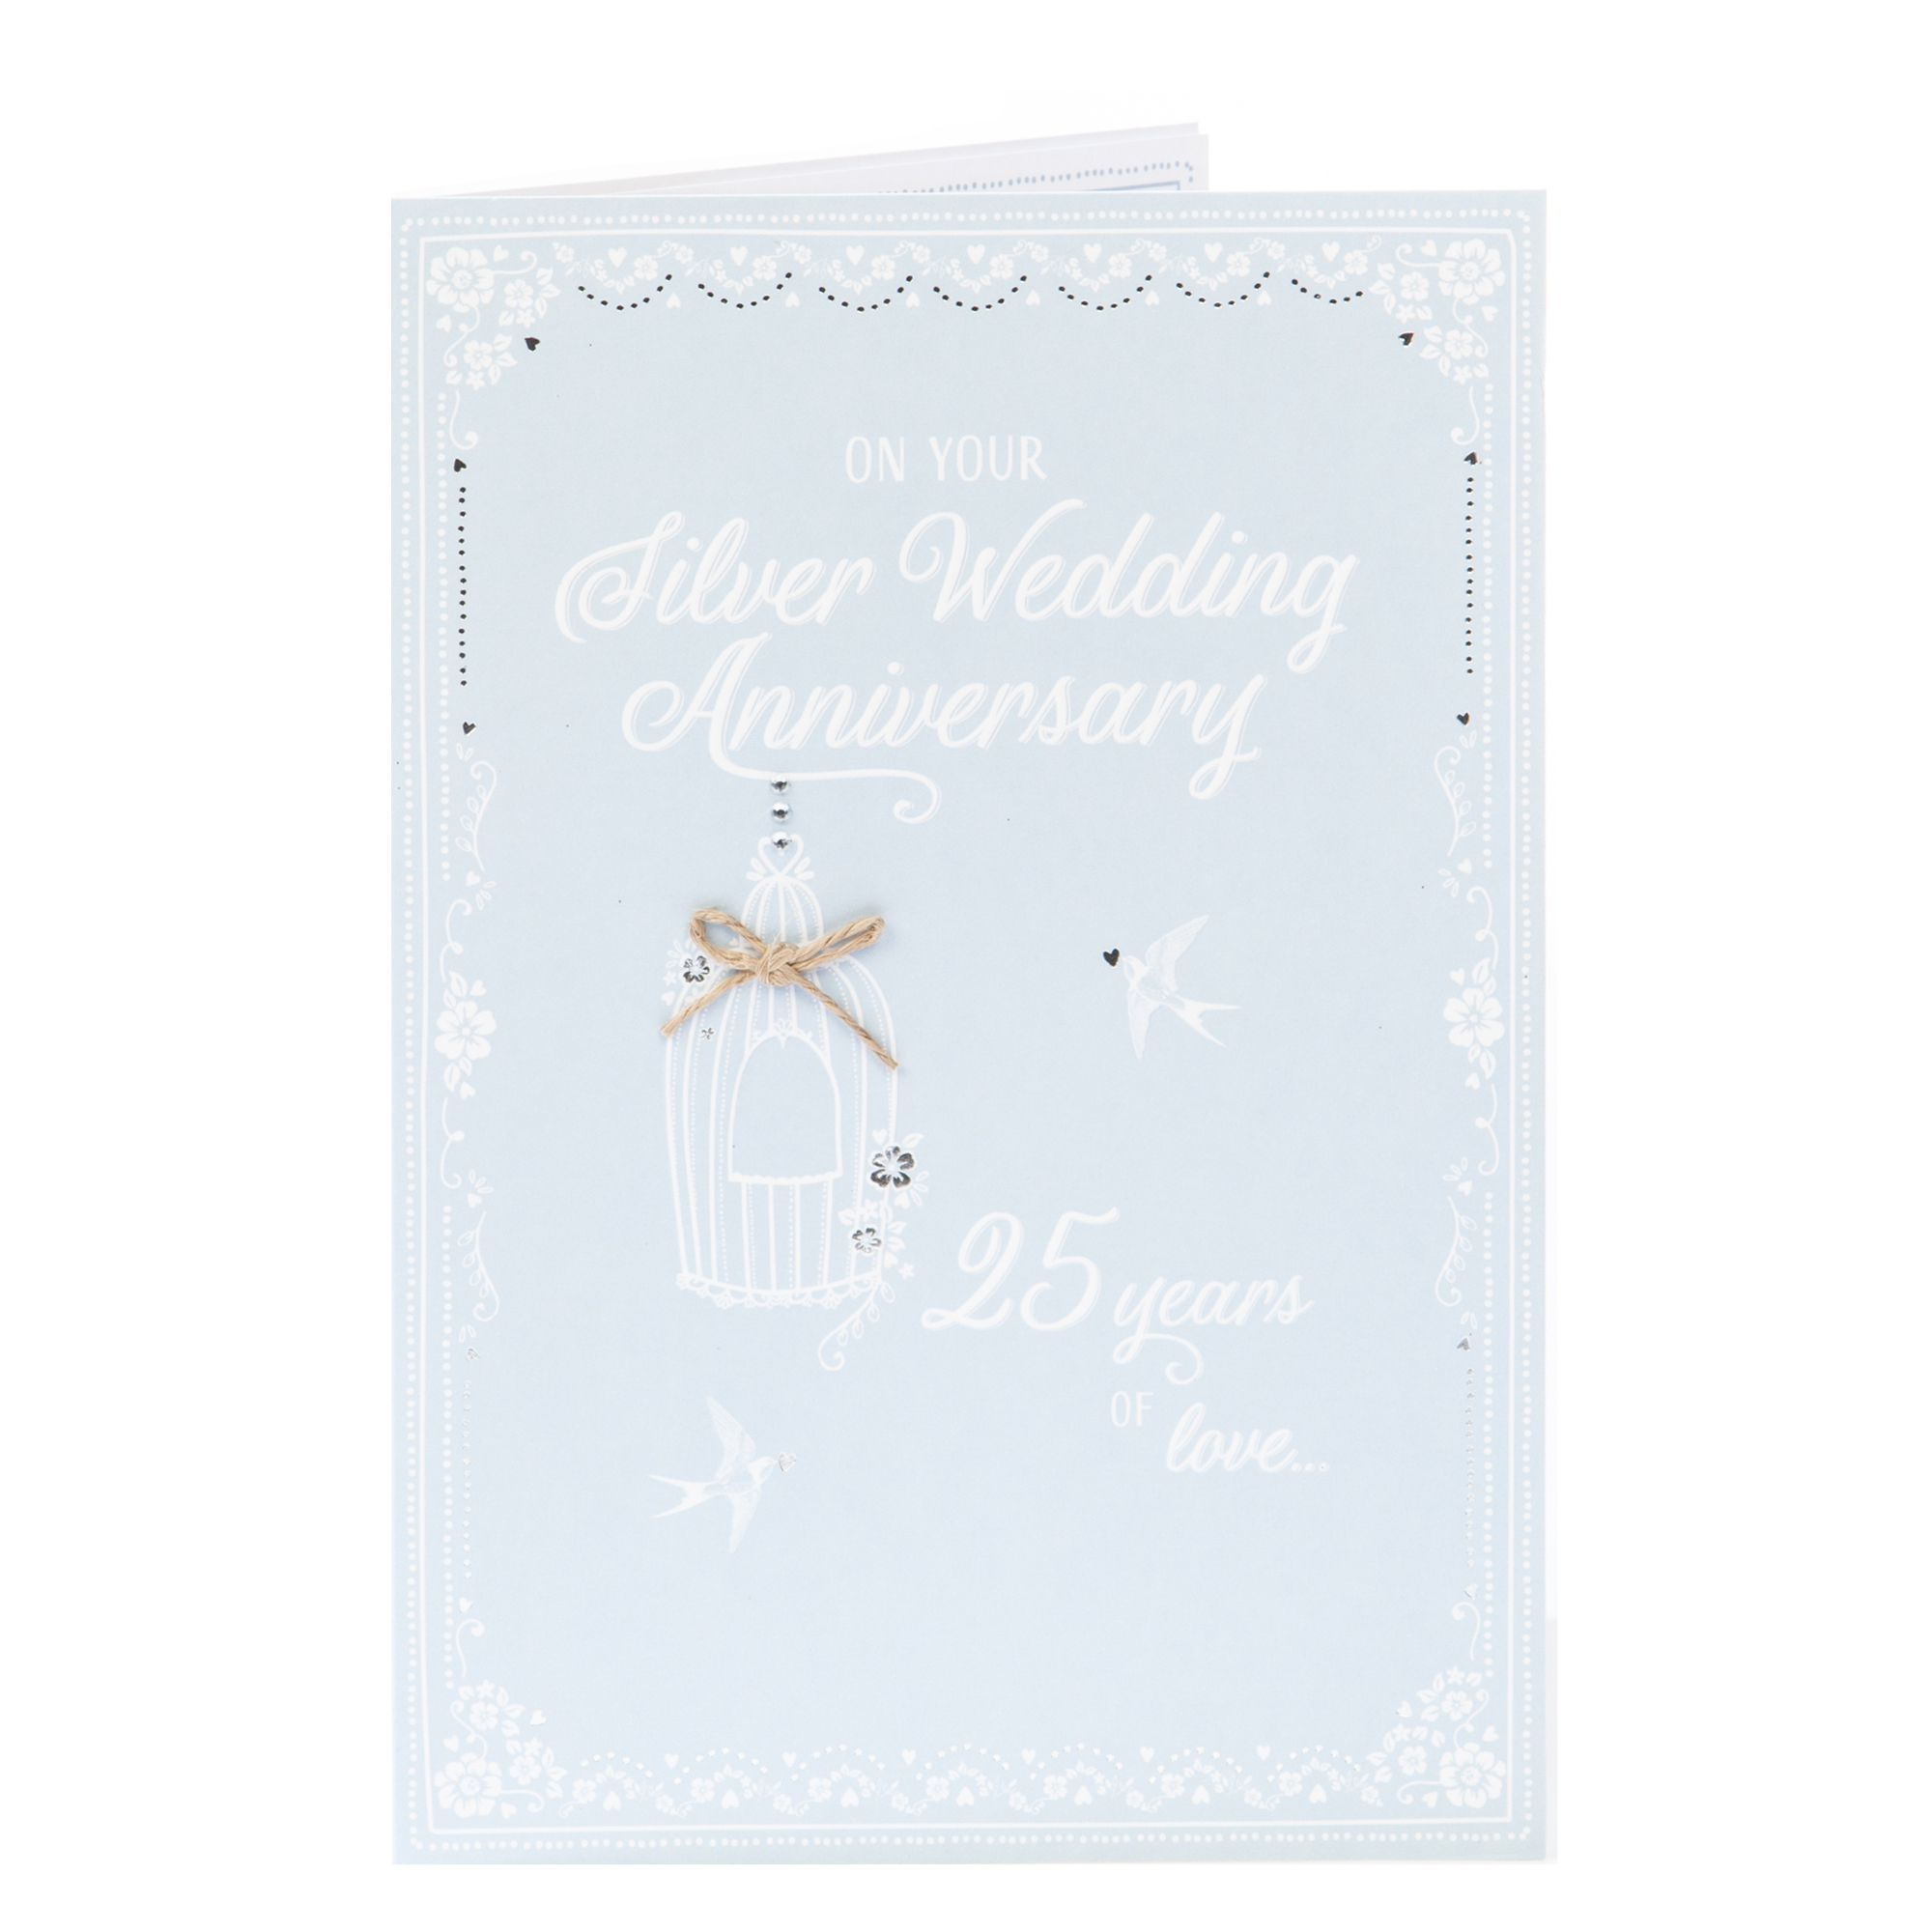 Silver Wedding Anniversary Card - 25 Years Of Love